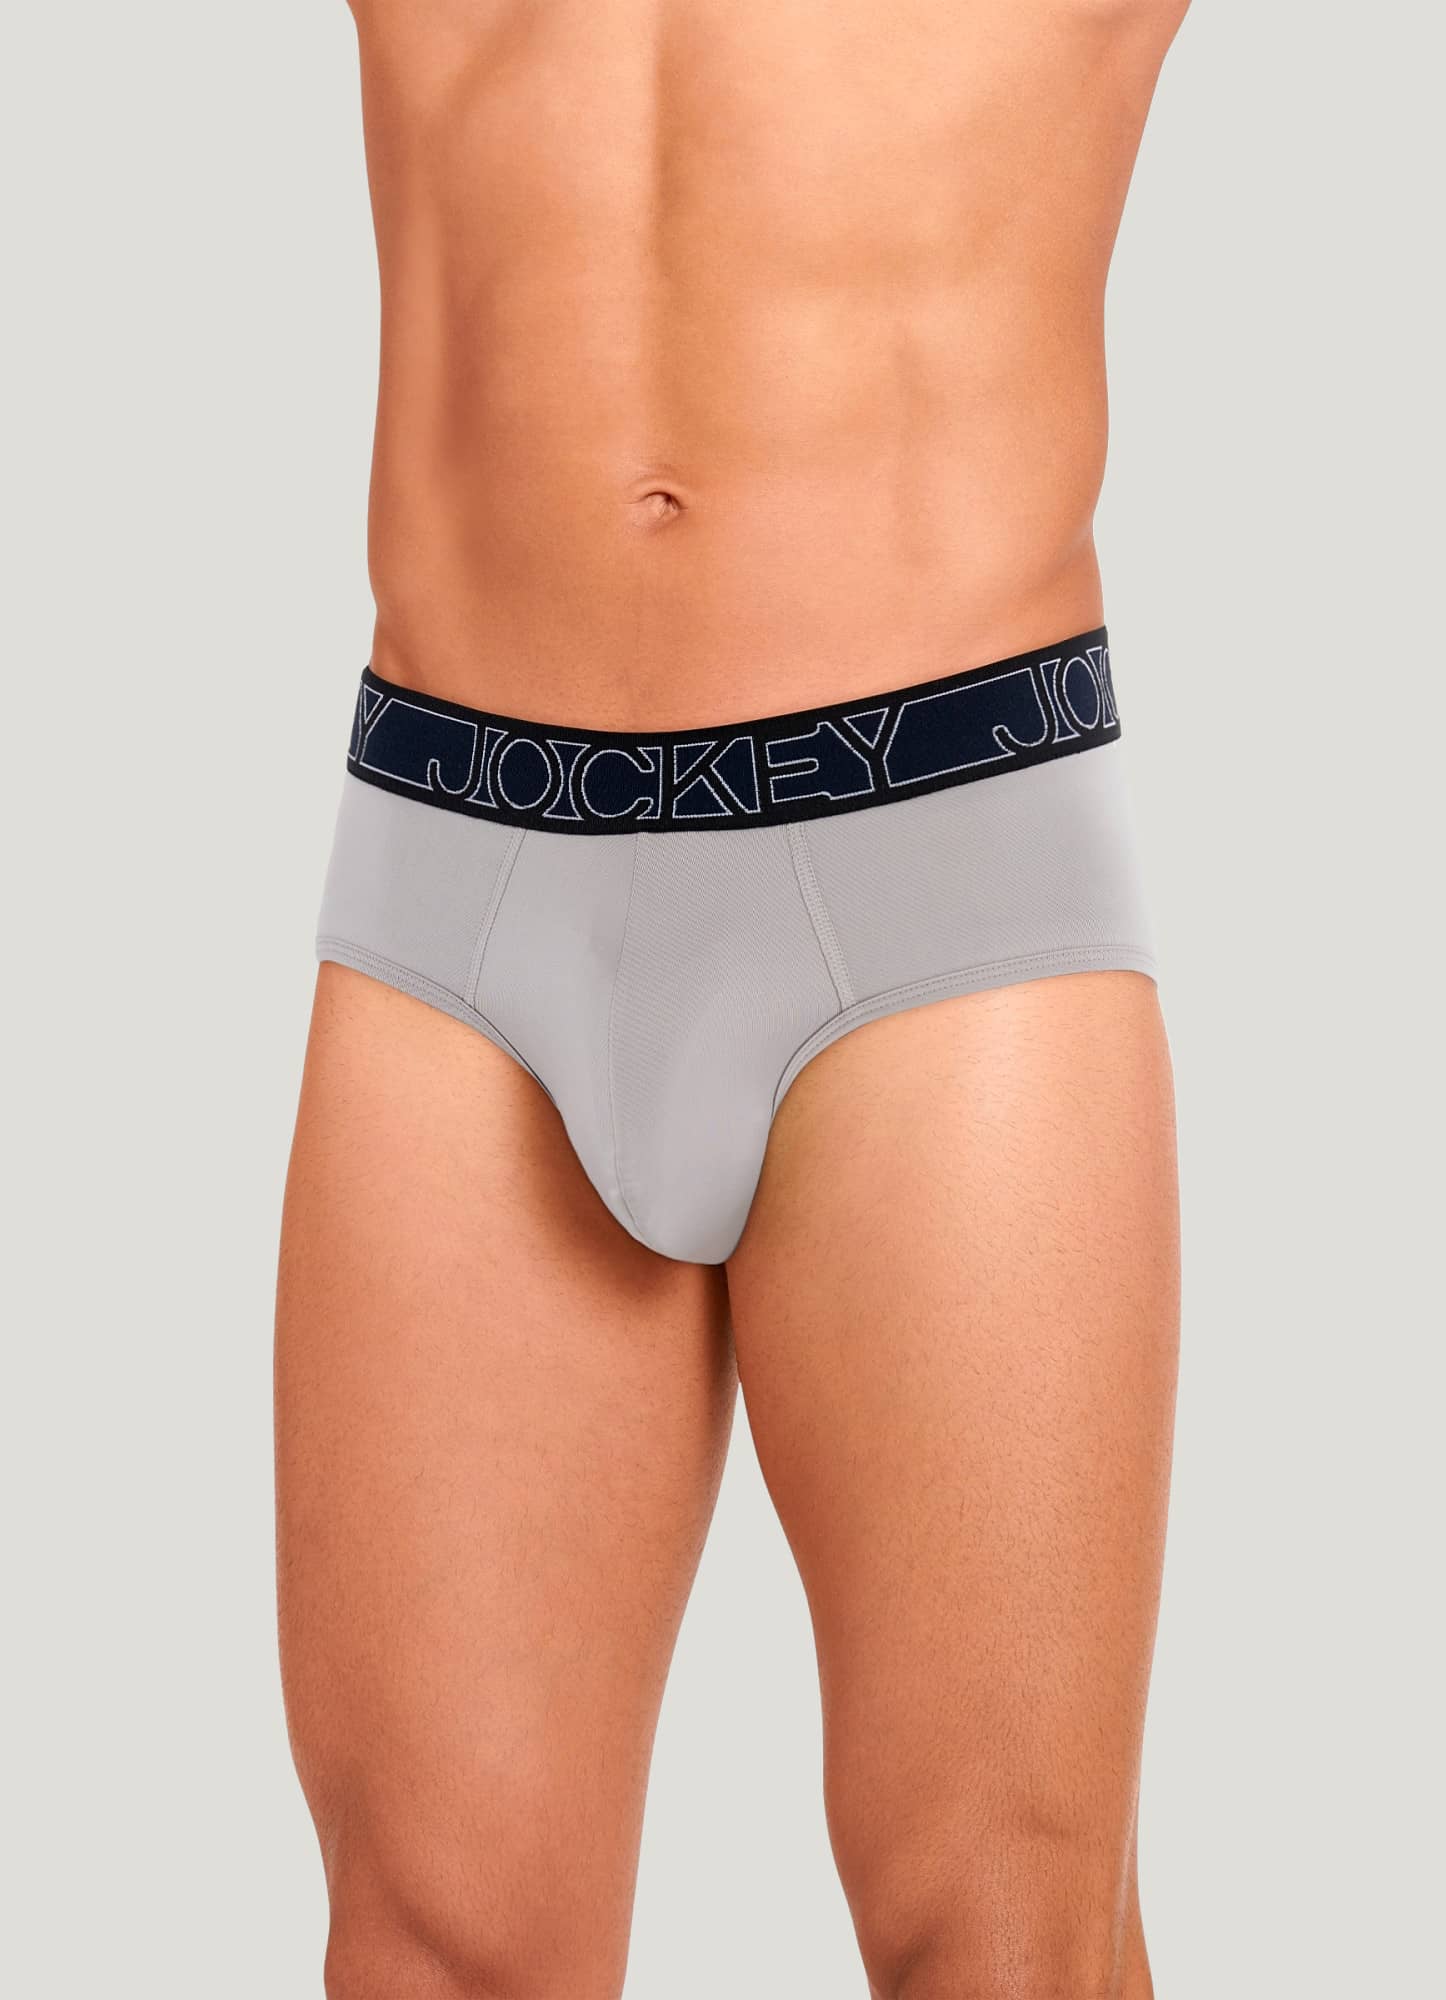 Jockey Men's Underwear Microfiber 13 Quad Short, Black, M at  Men's  Clothing store